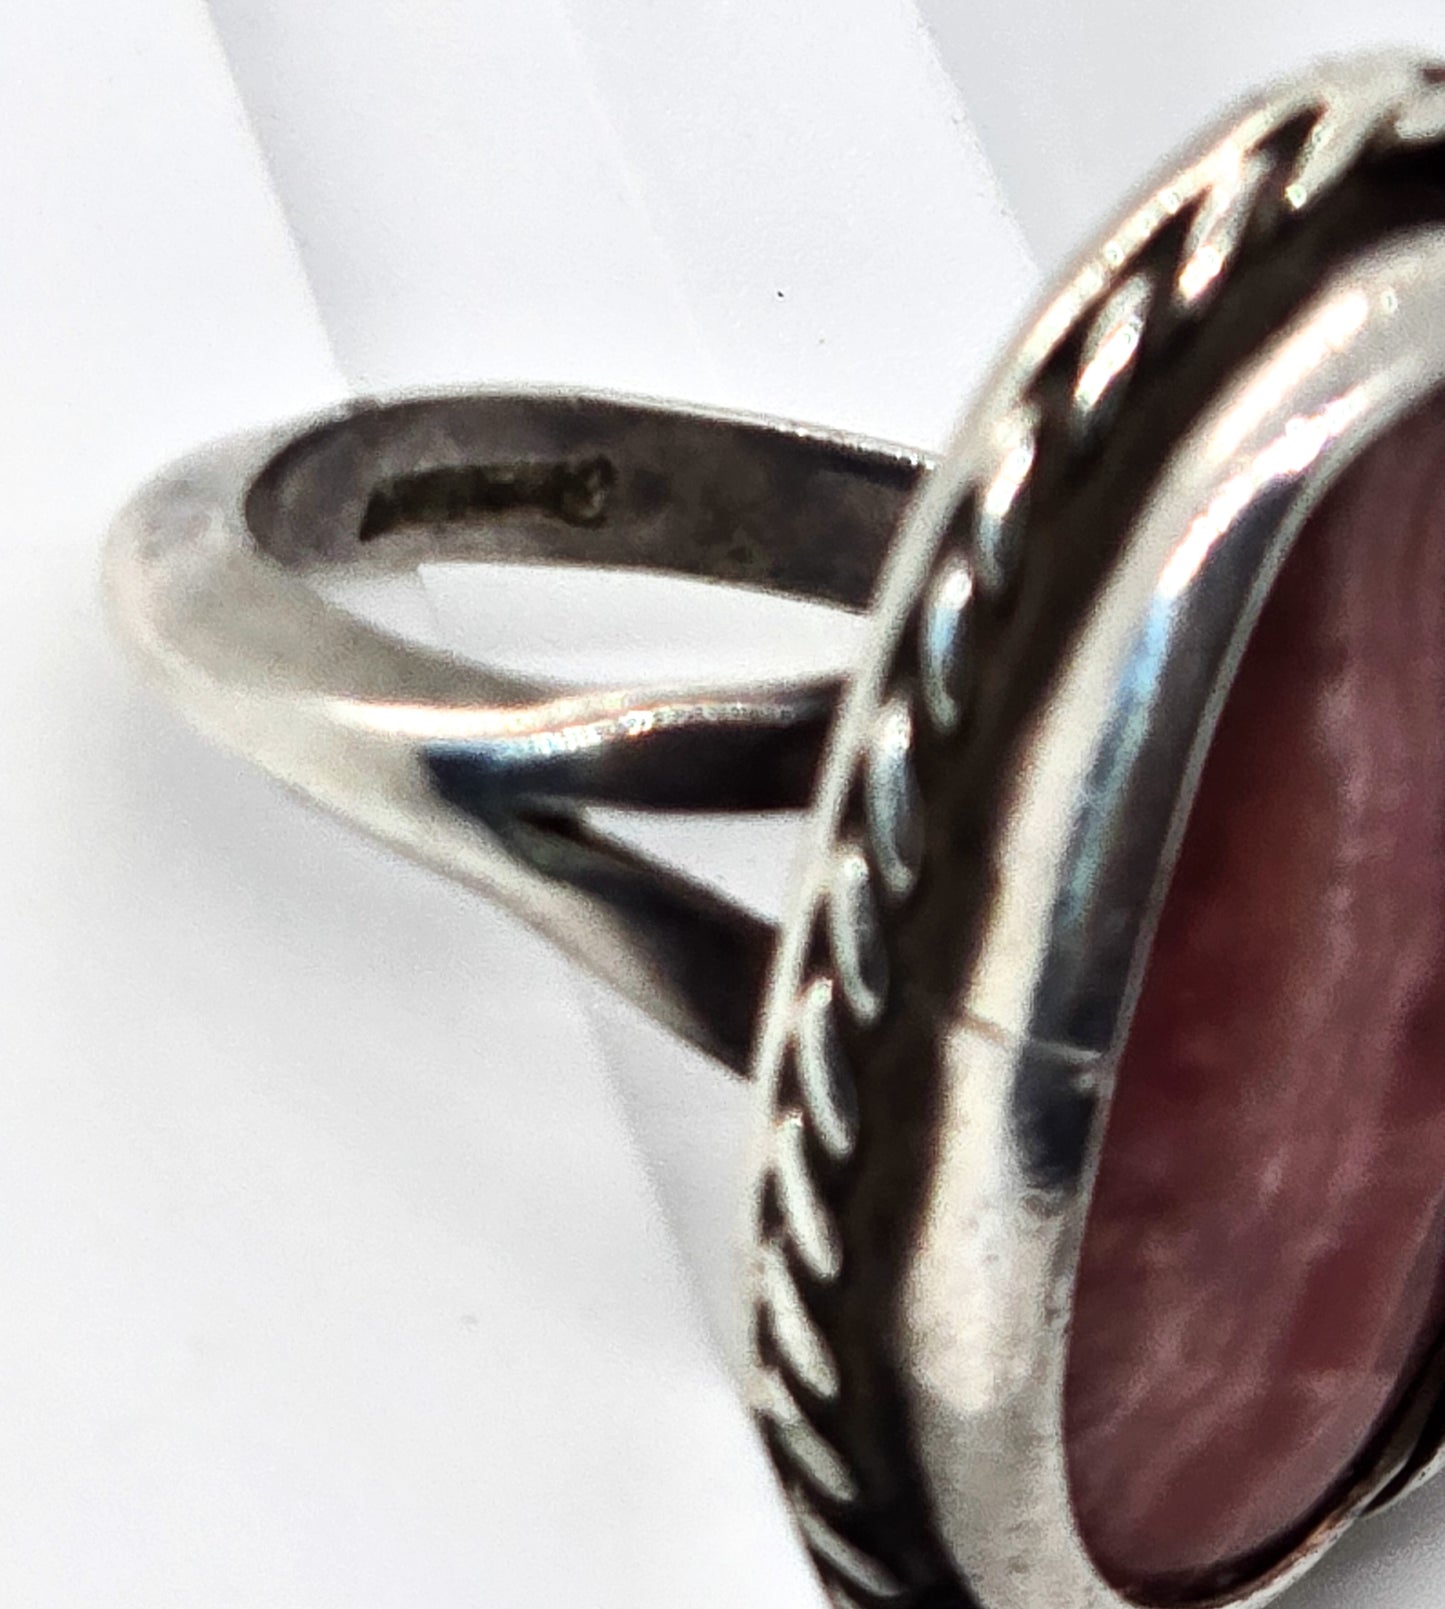 Rhodochrosite Pink Gemstone Native American Sterling silver vintage ring size 7